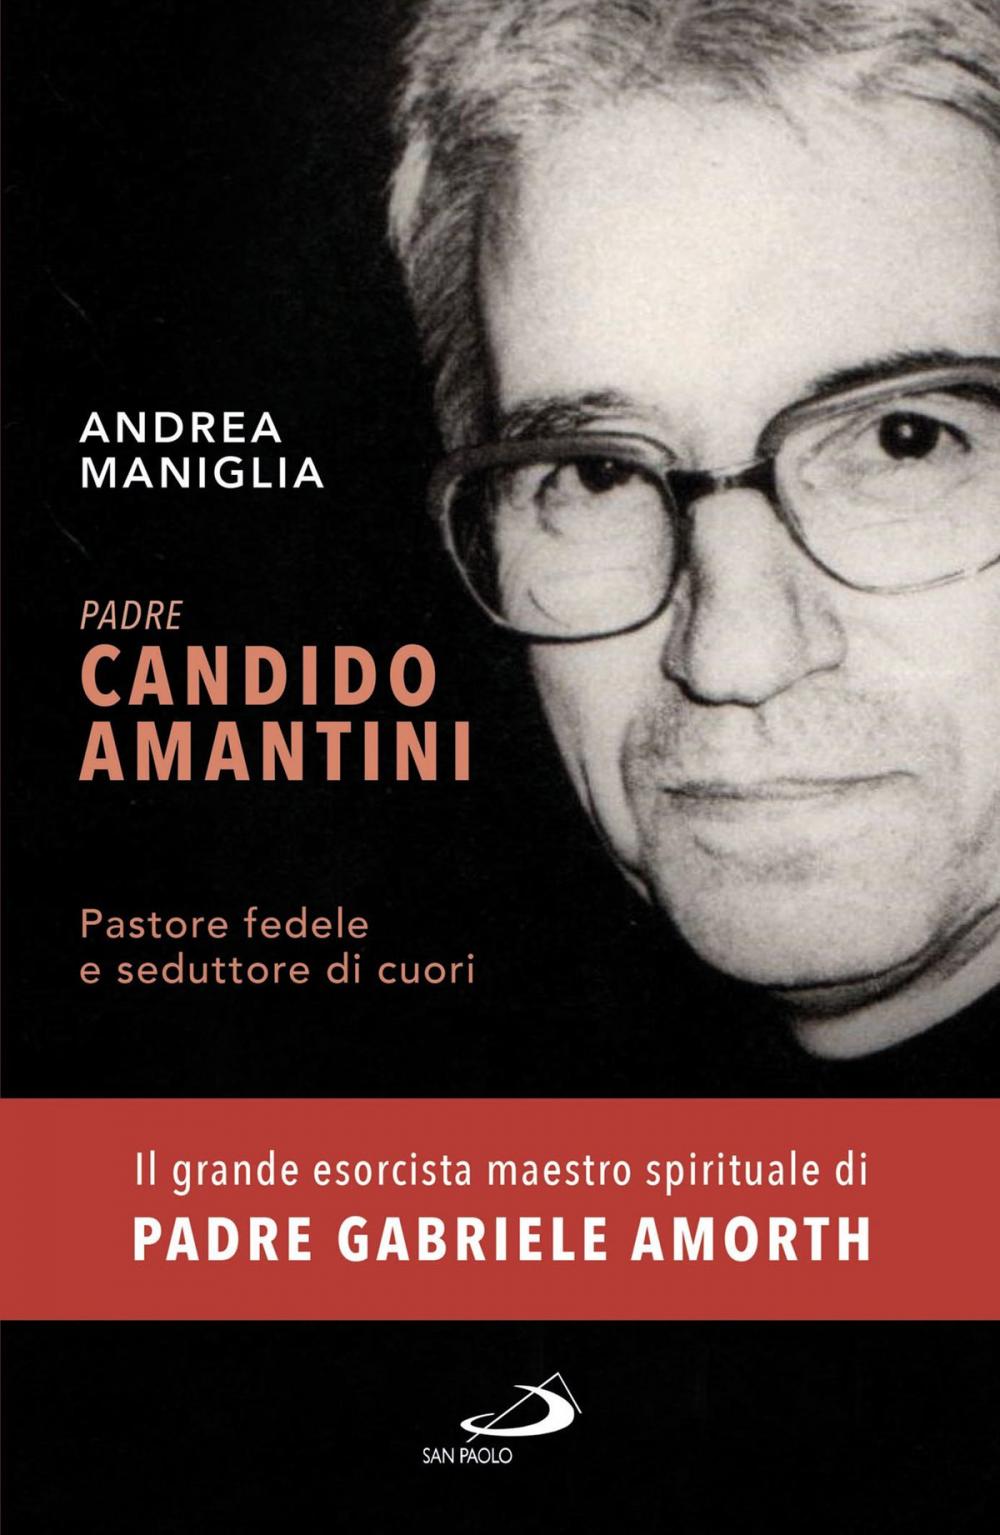 Big bigCover of Padre Candido Amantini